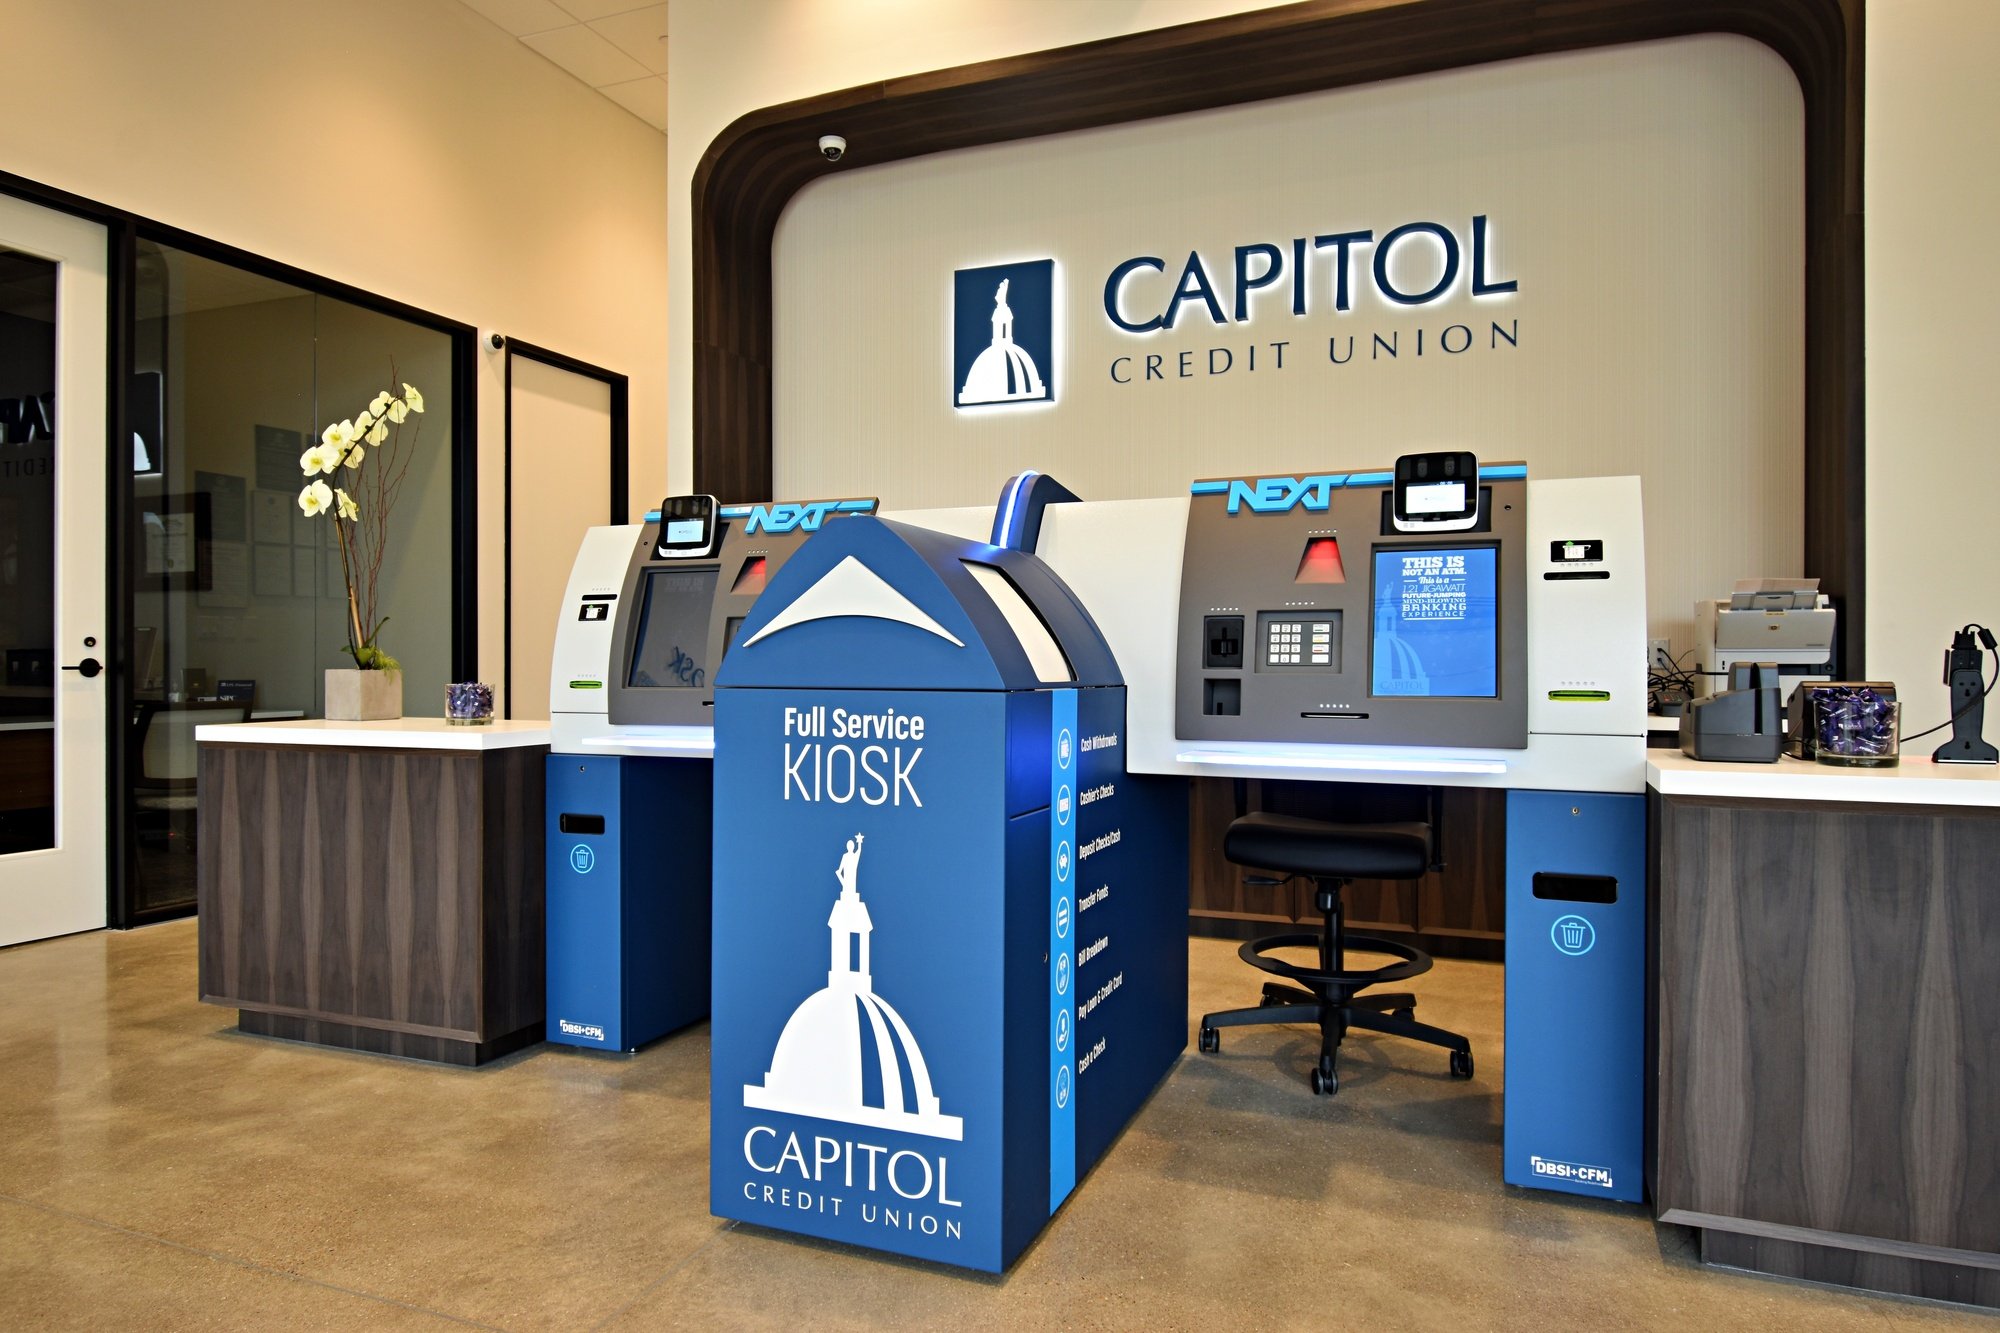 Capitol Credit Union NEXT full-service kiosk